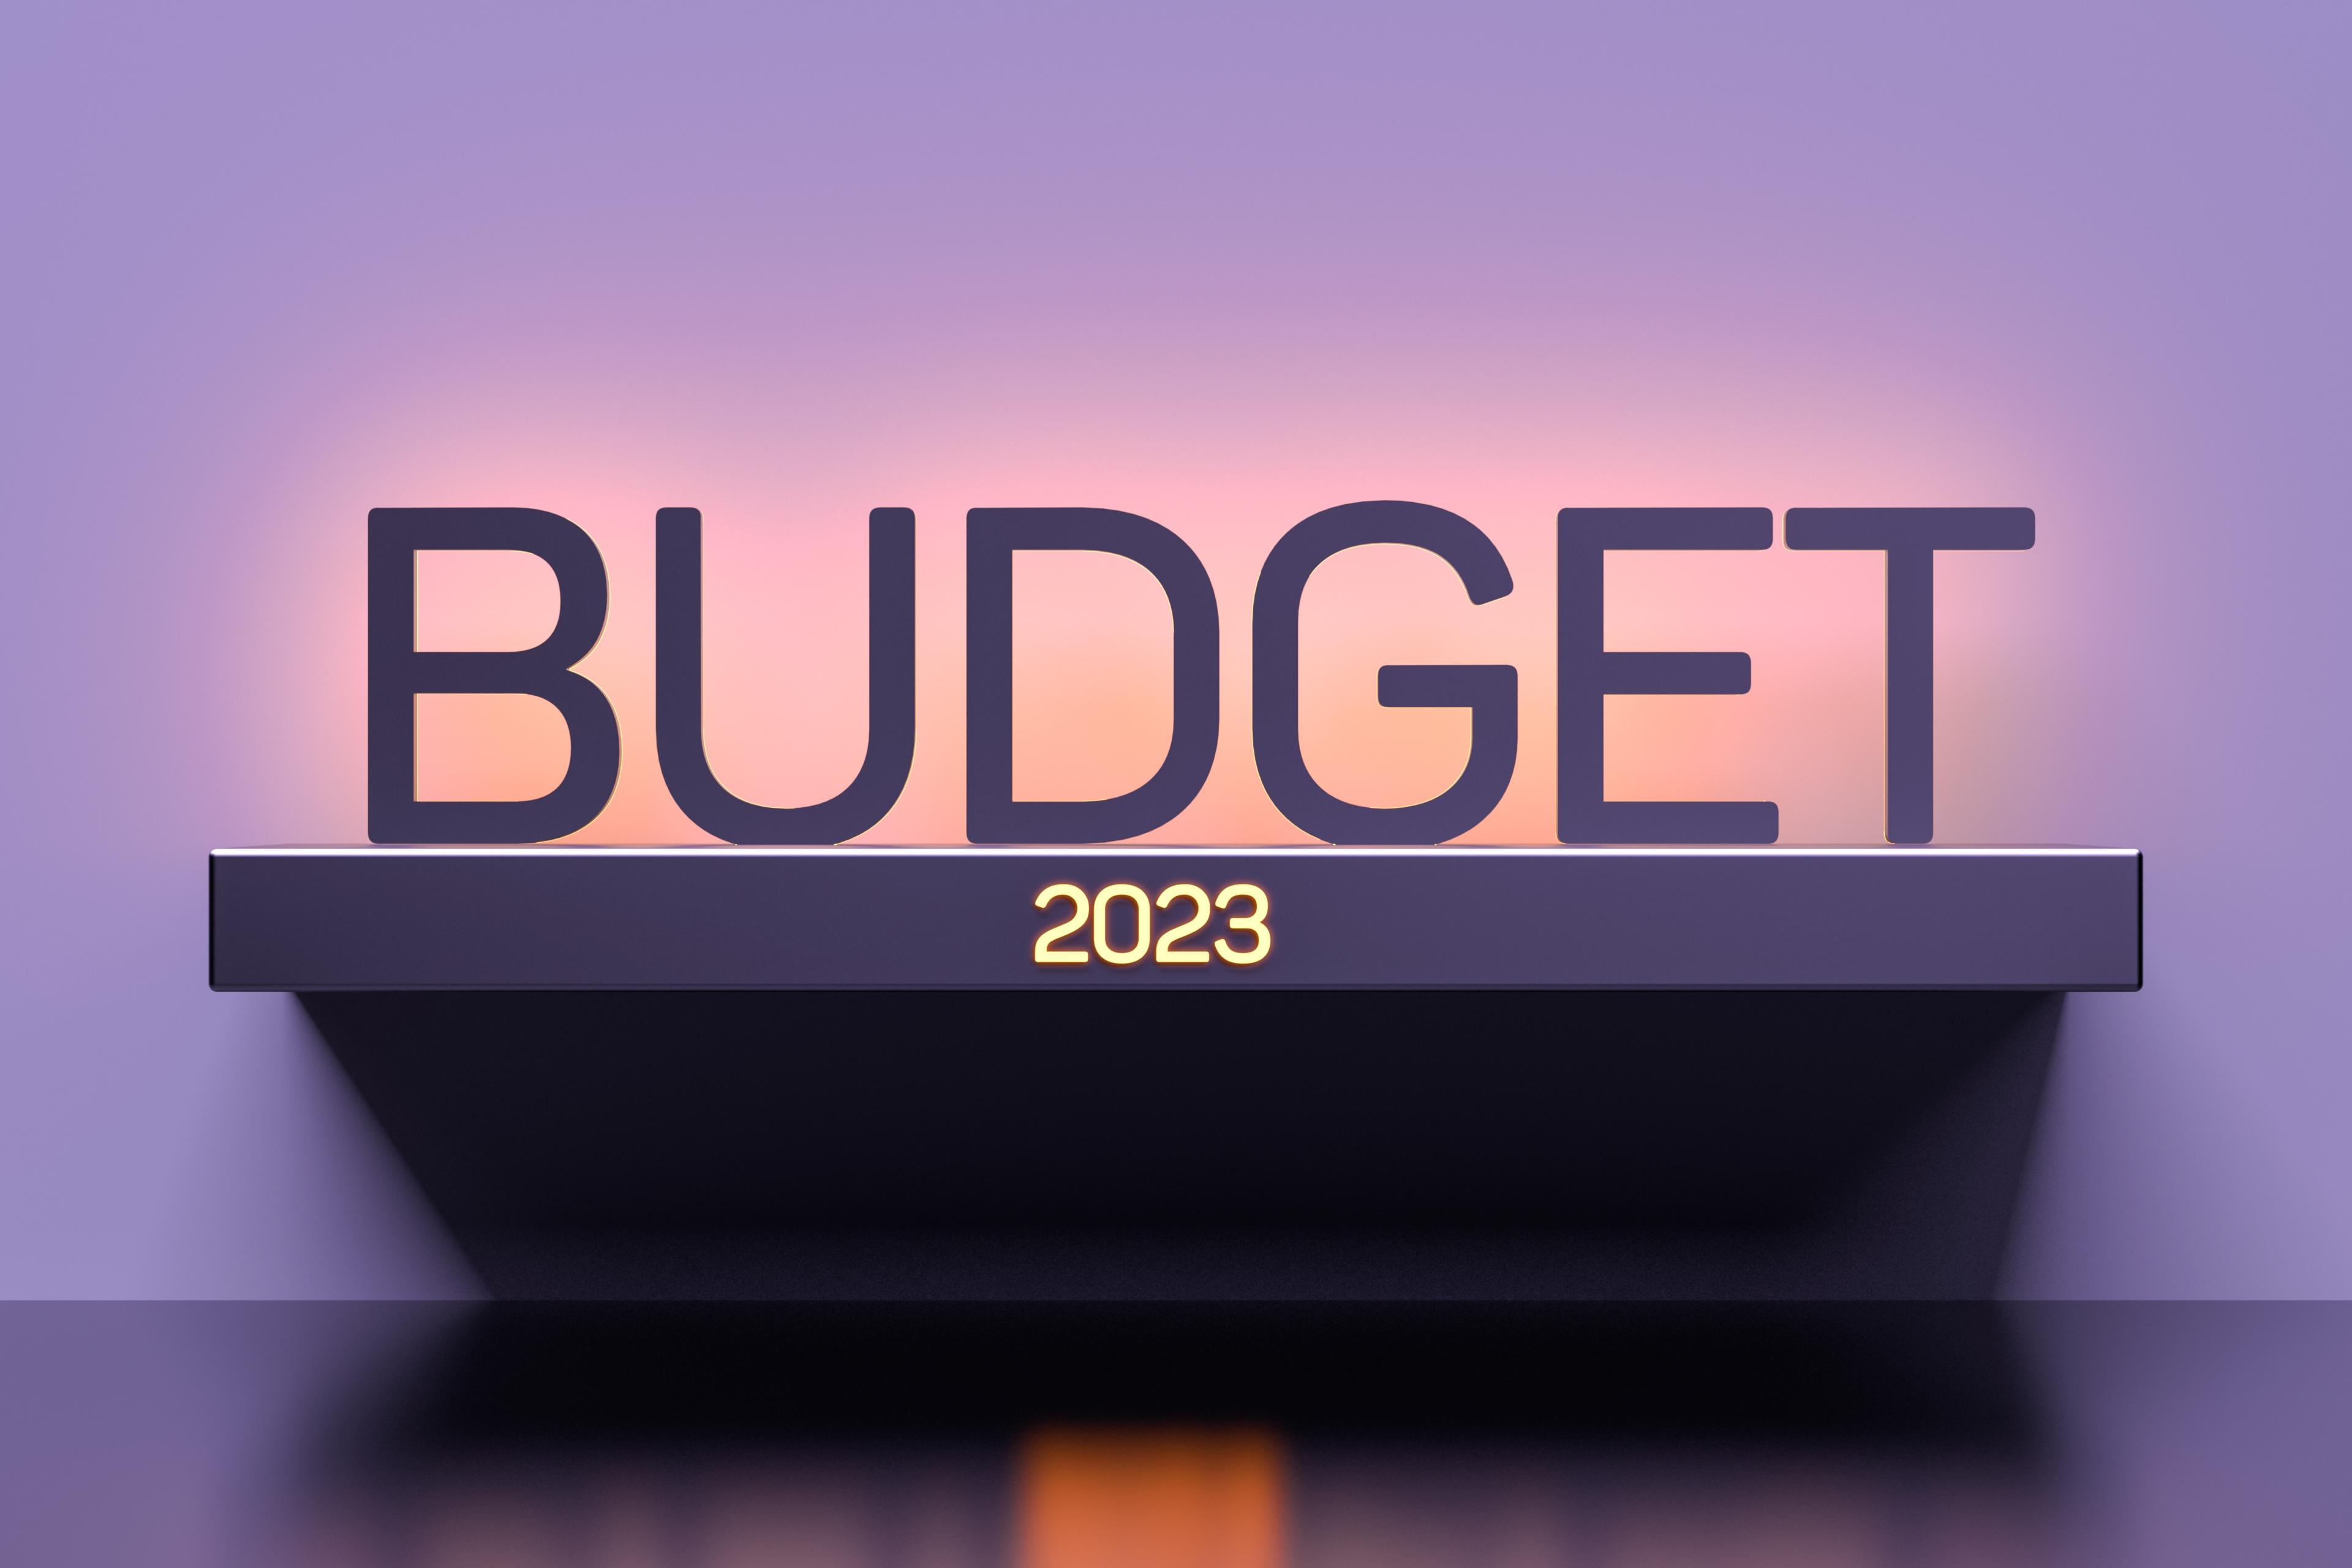 Budget Highlights 2023